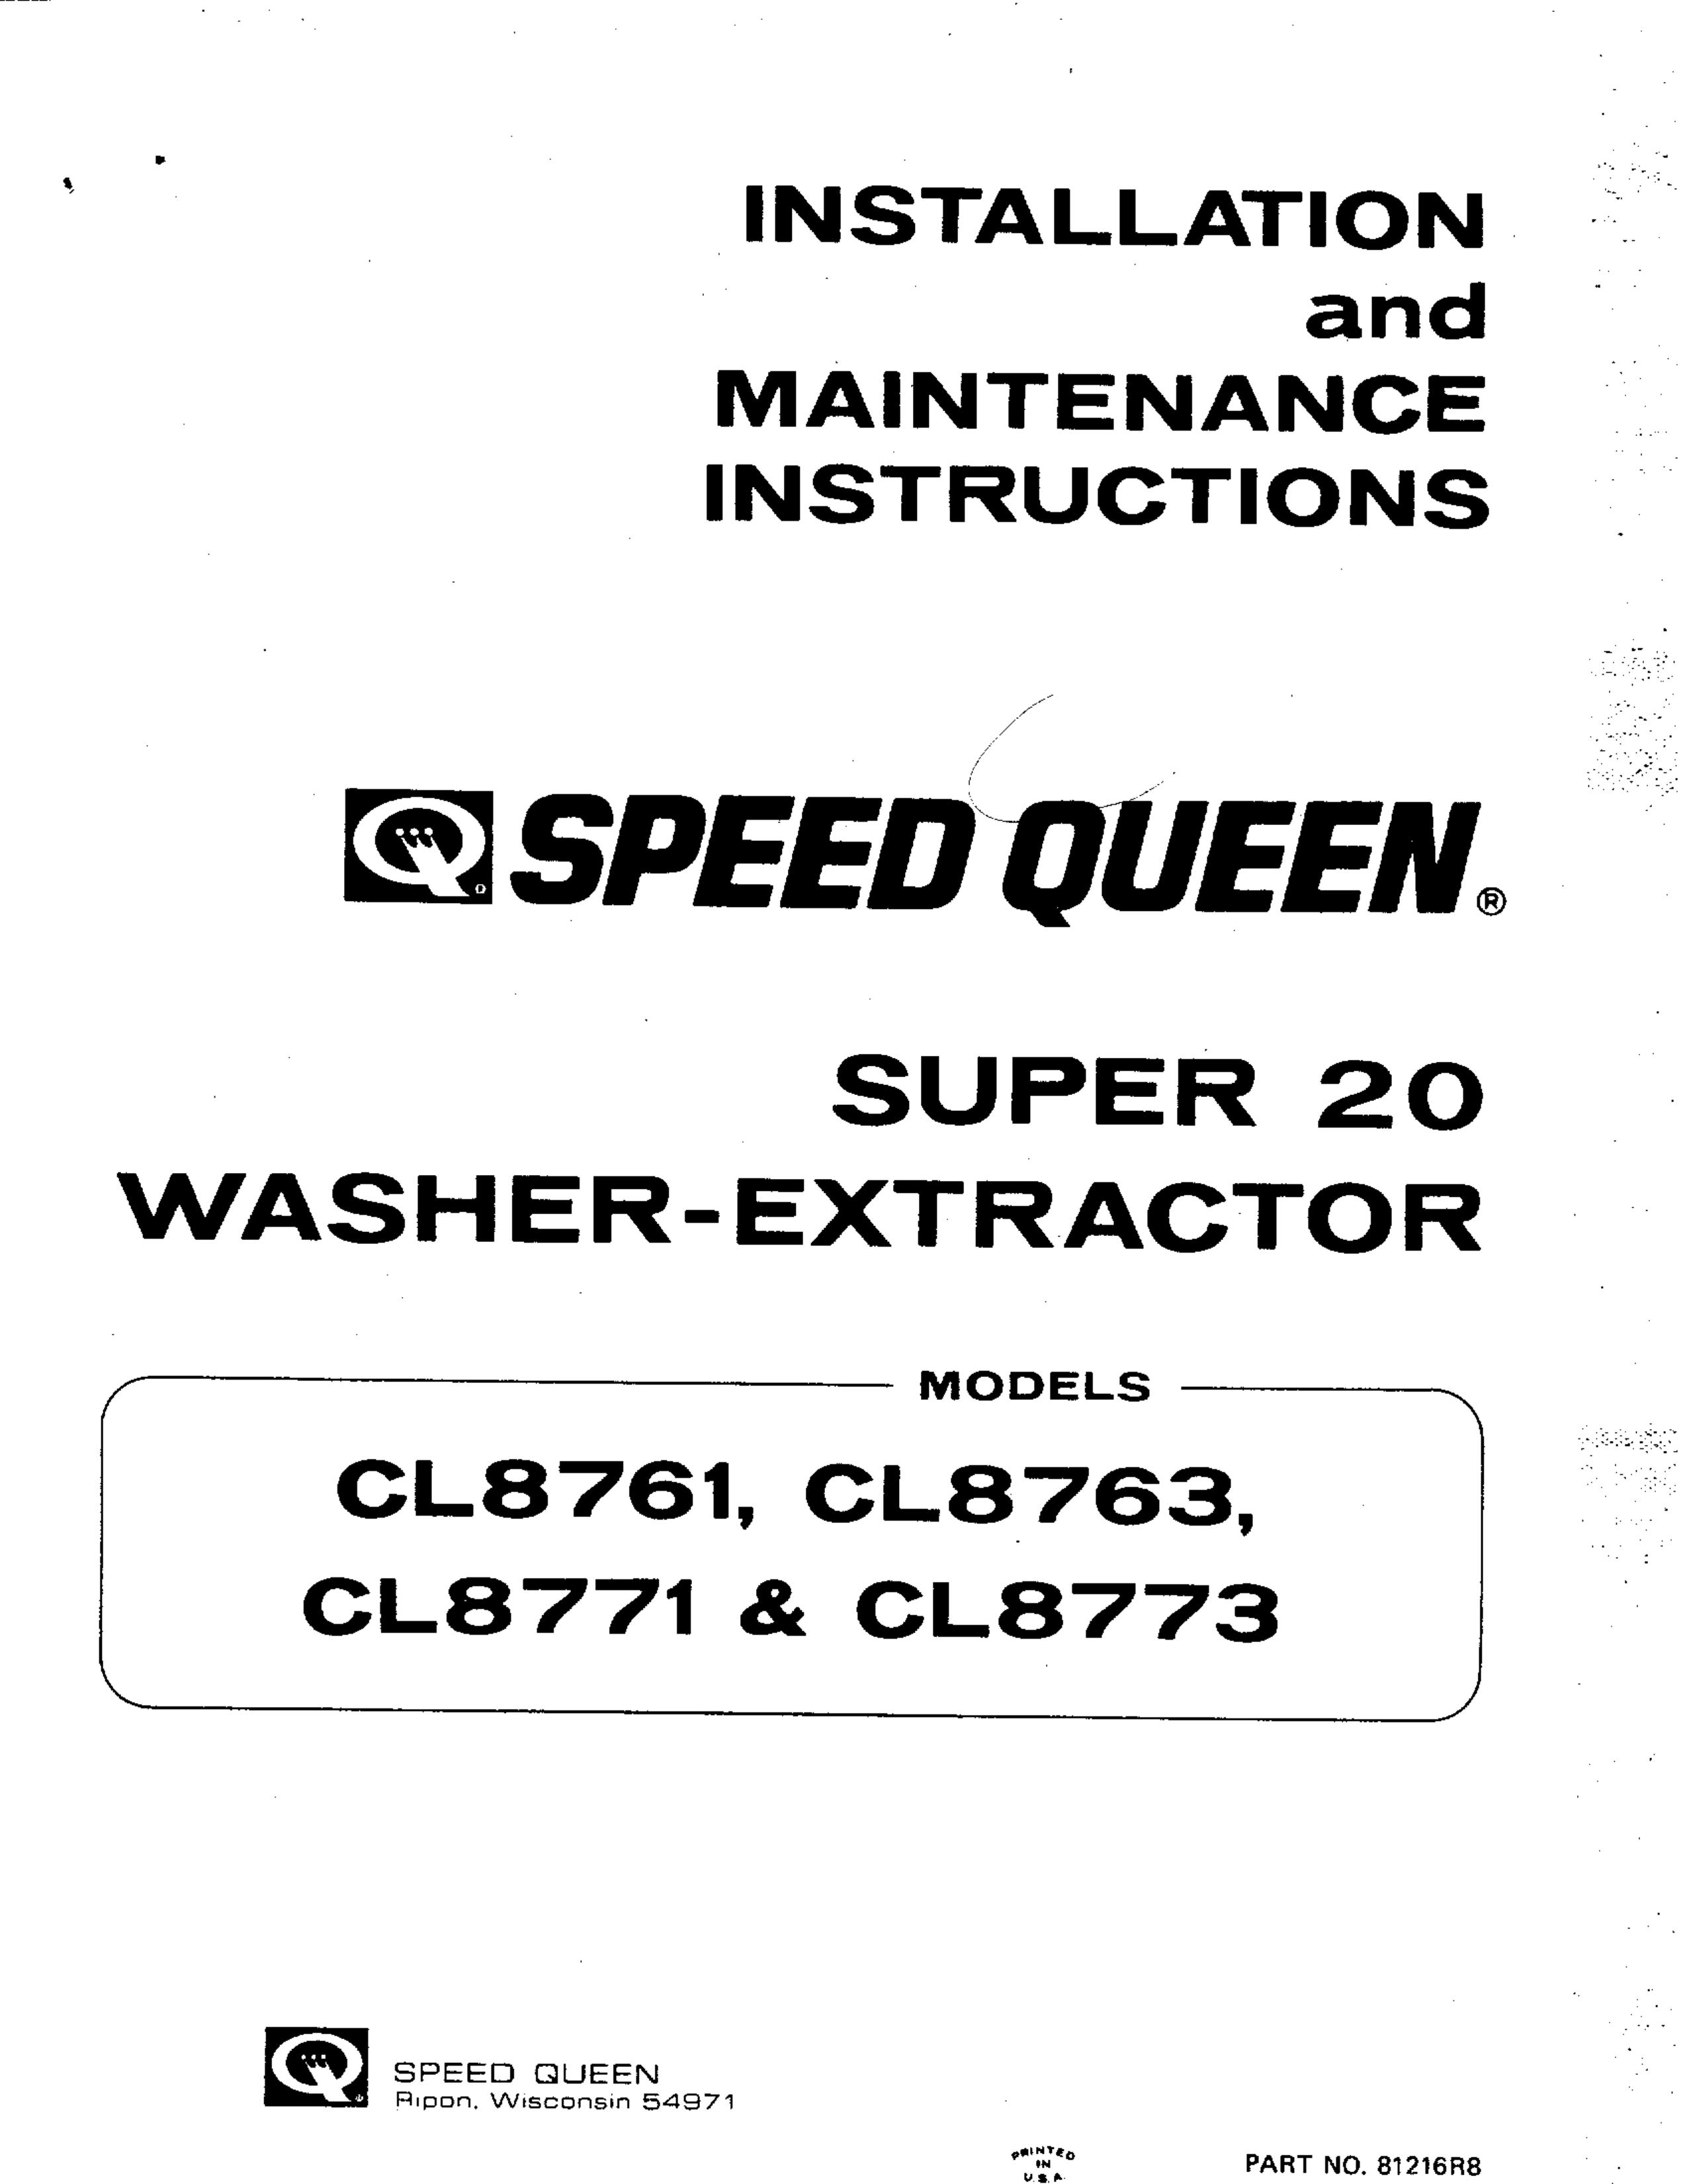 Speed Queen CL8771 Washer/Dryer User Manual